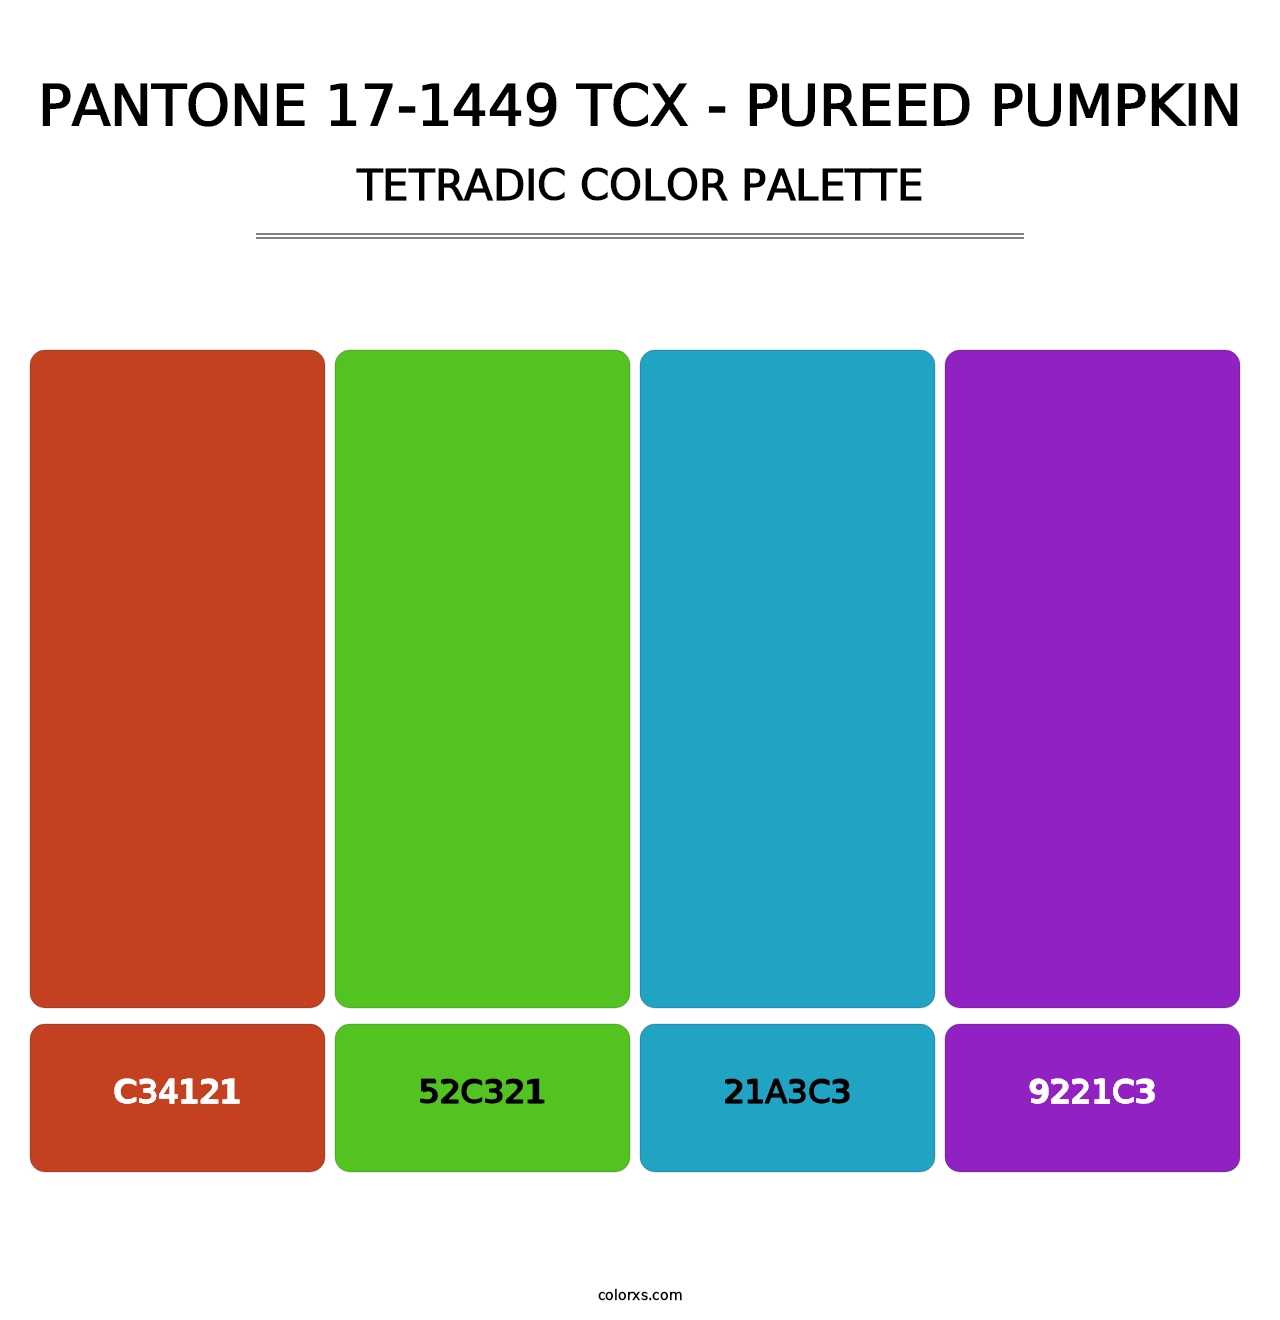 PANTONE 17-1449 TCX - Pureed Pumpkin - Tetradic Color Palette